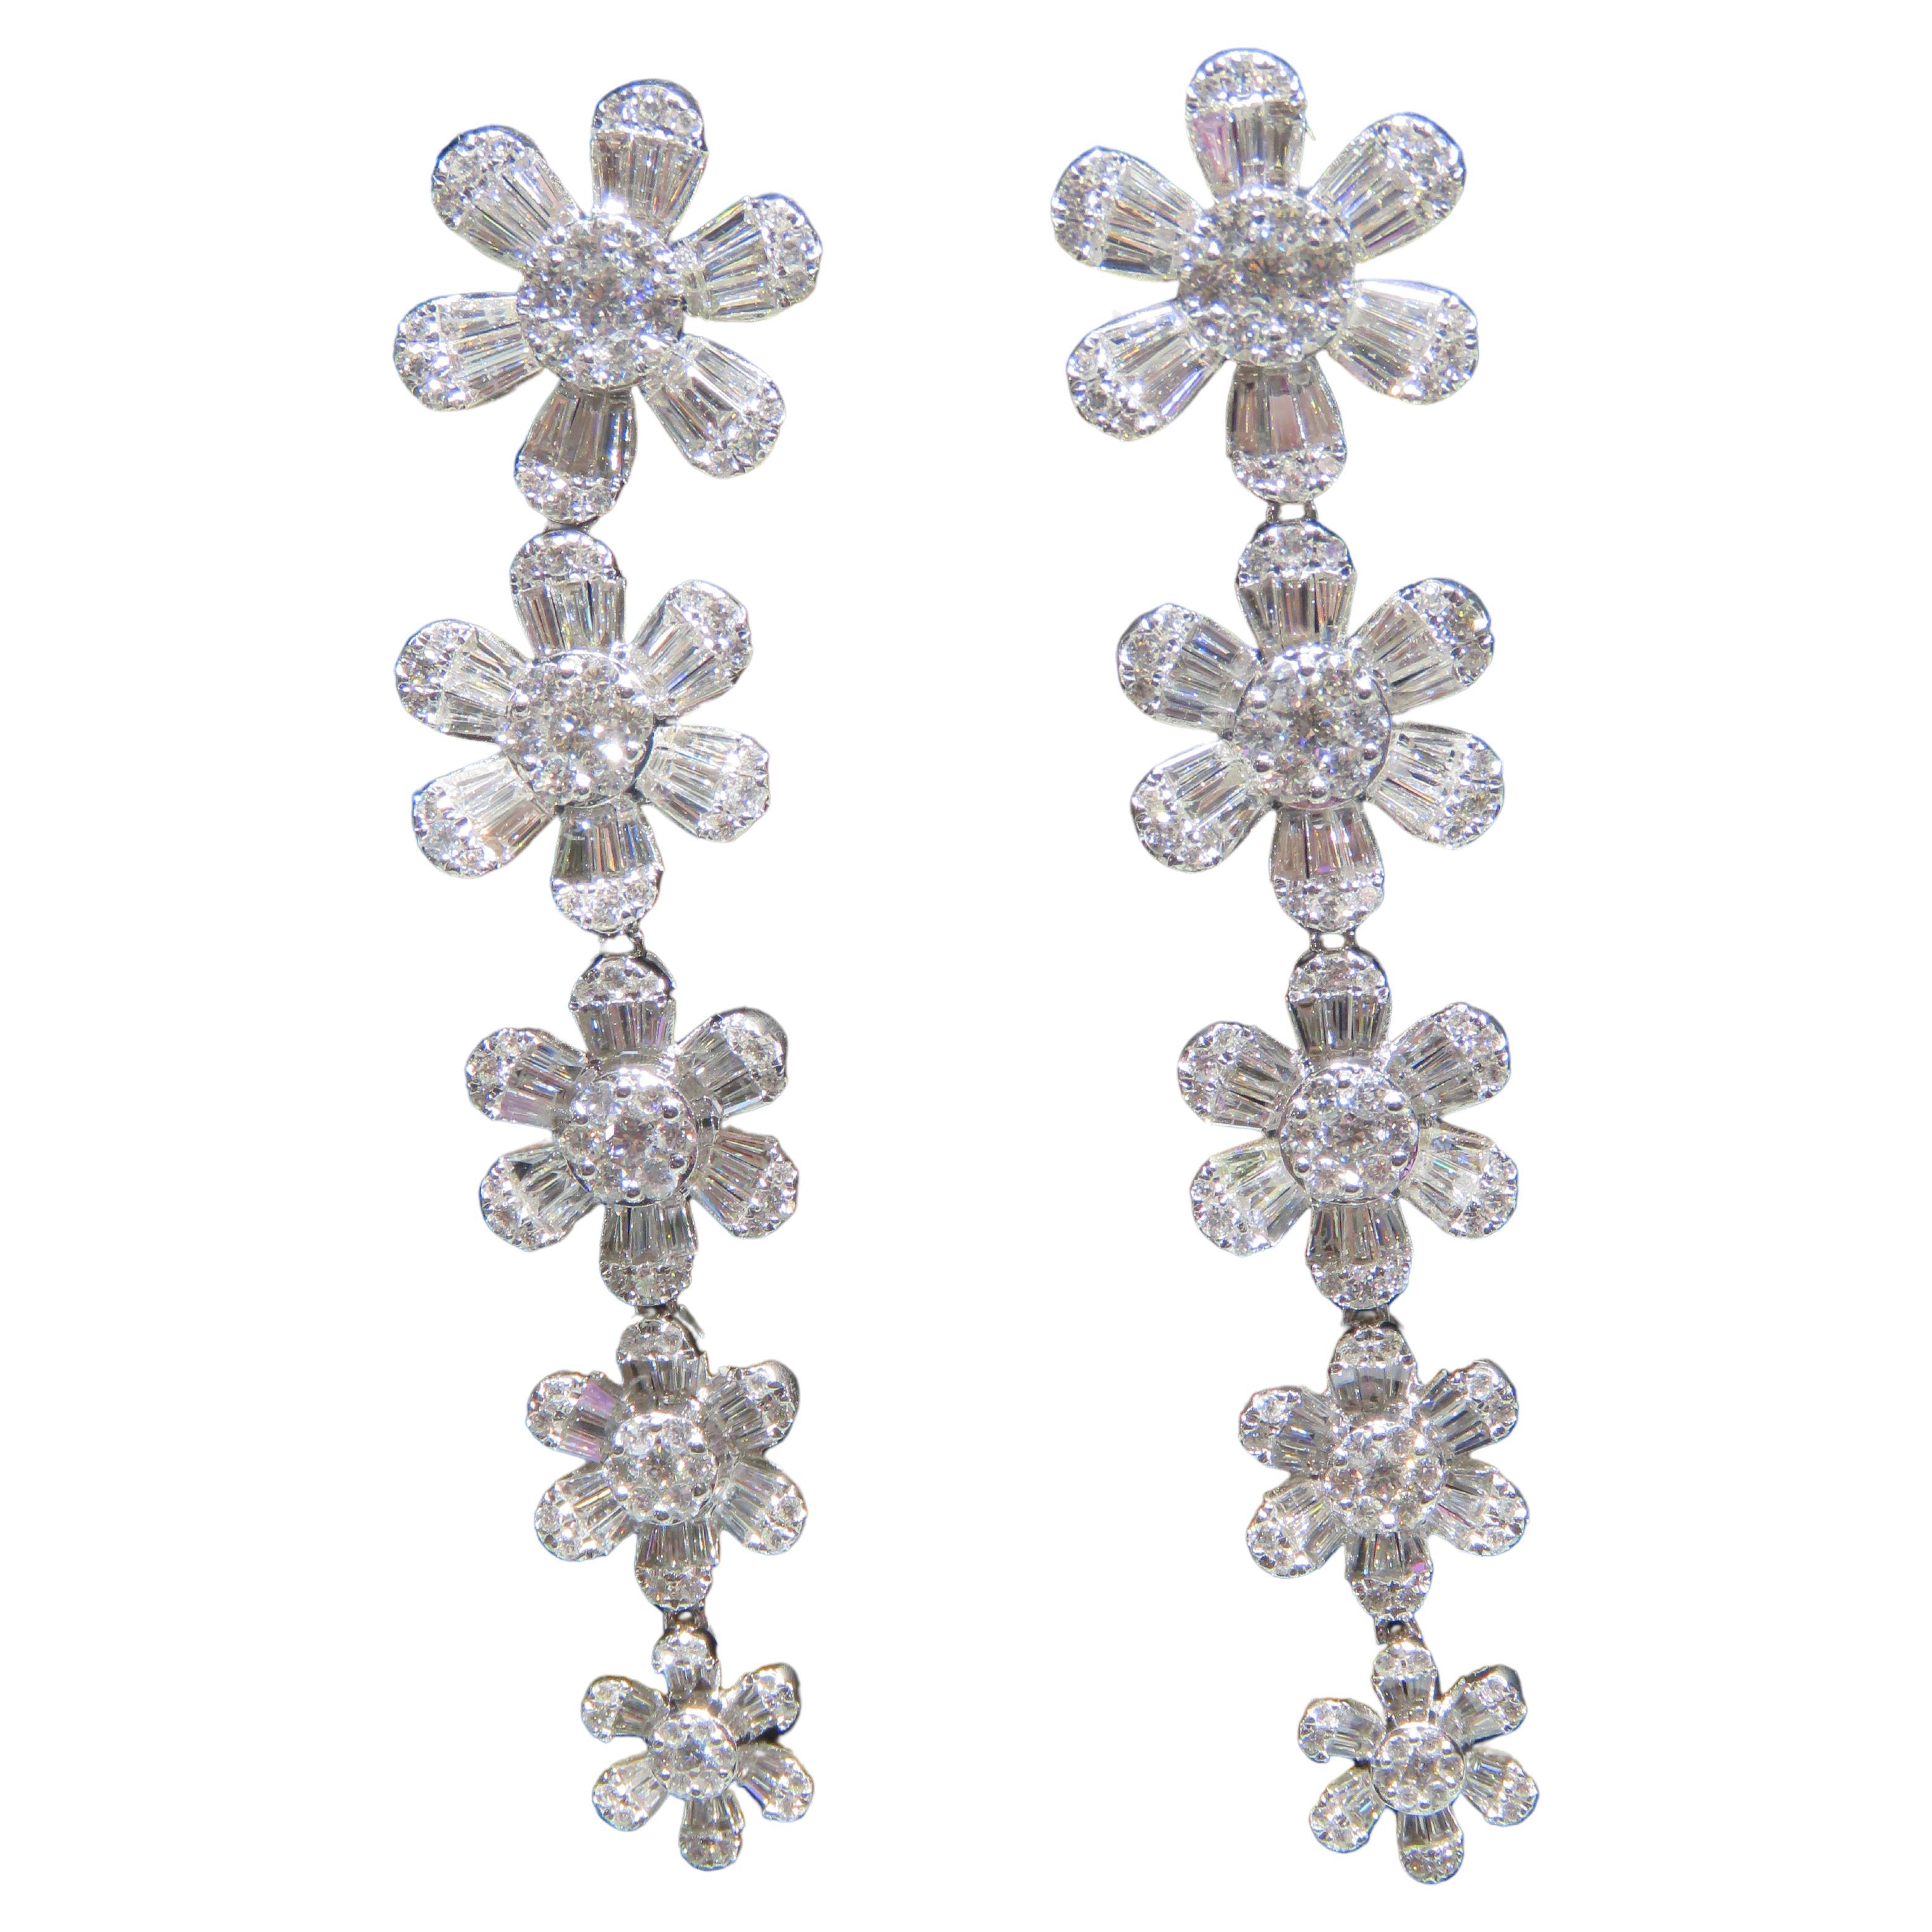 NWT $28, 000 Or 18KT Rare Fancy Long Flower Diamond Dangle Earrings